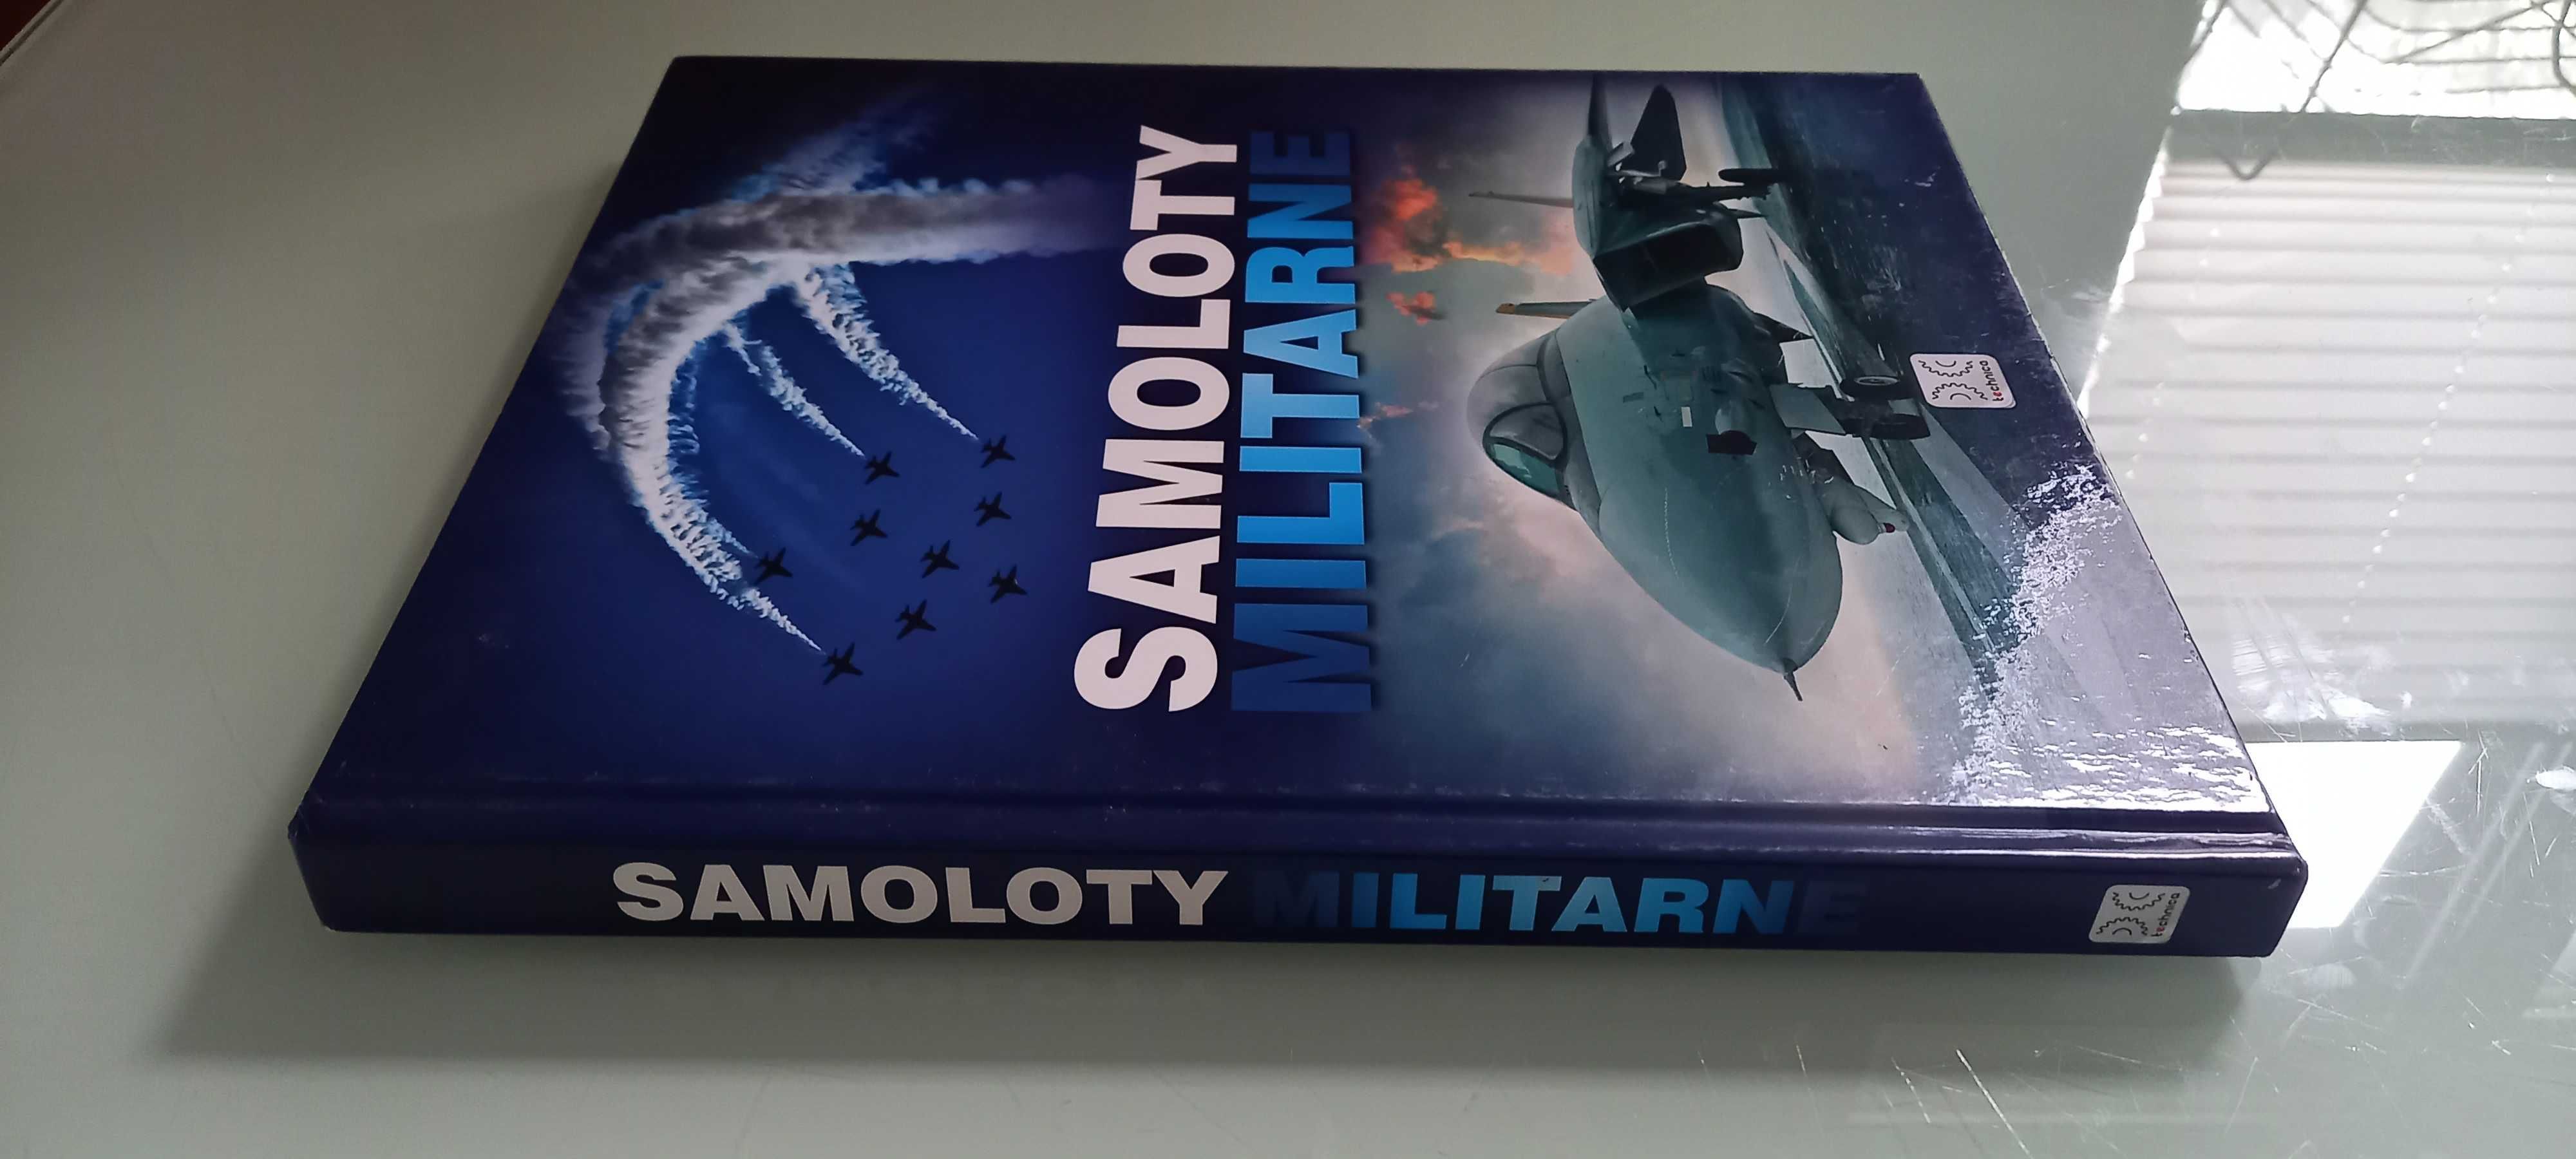 Samoloty militarne - album